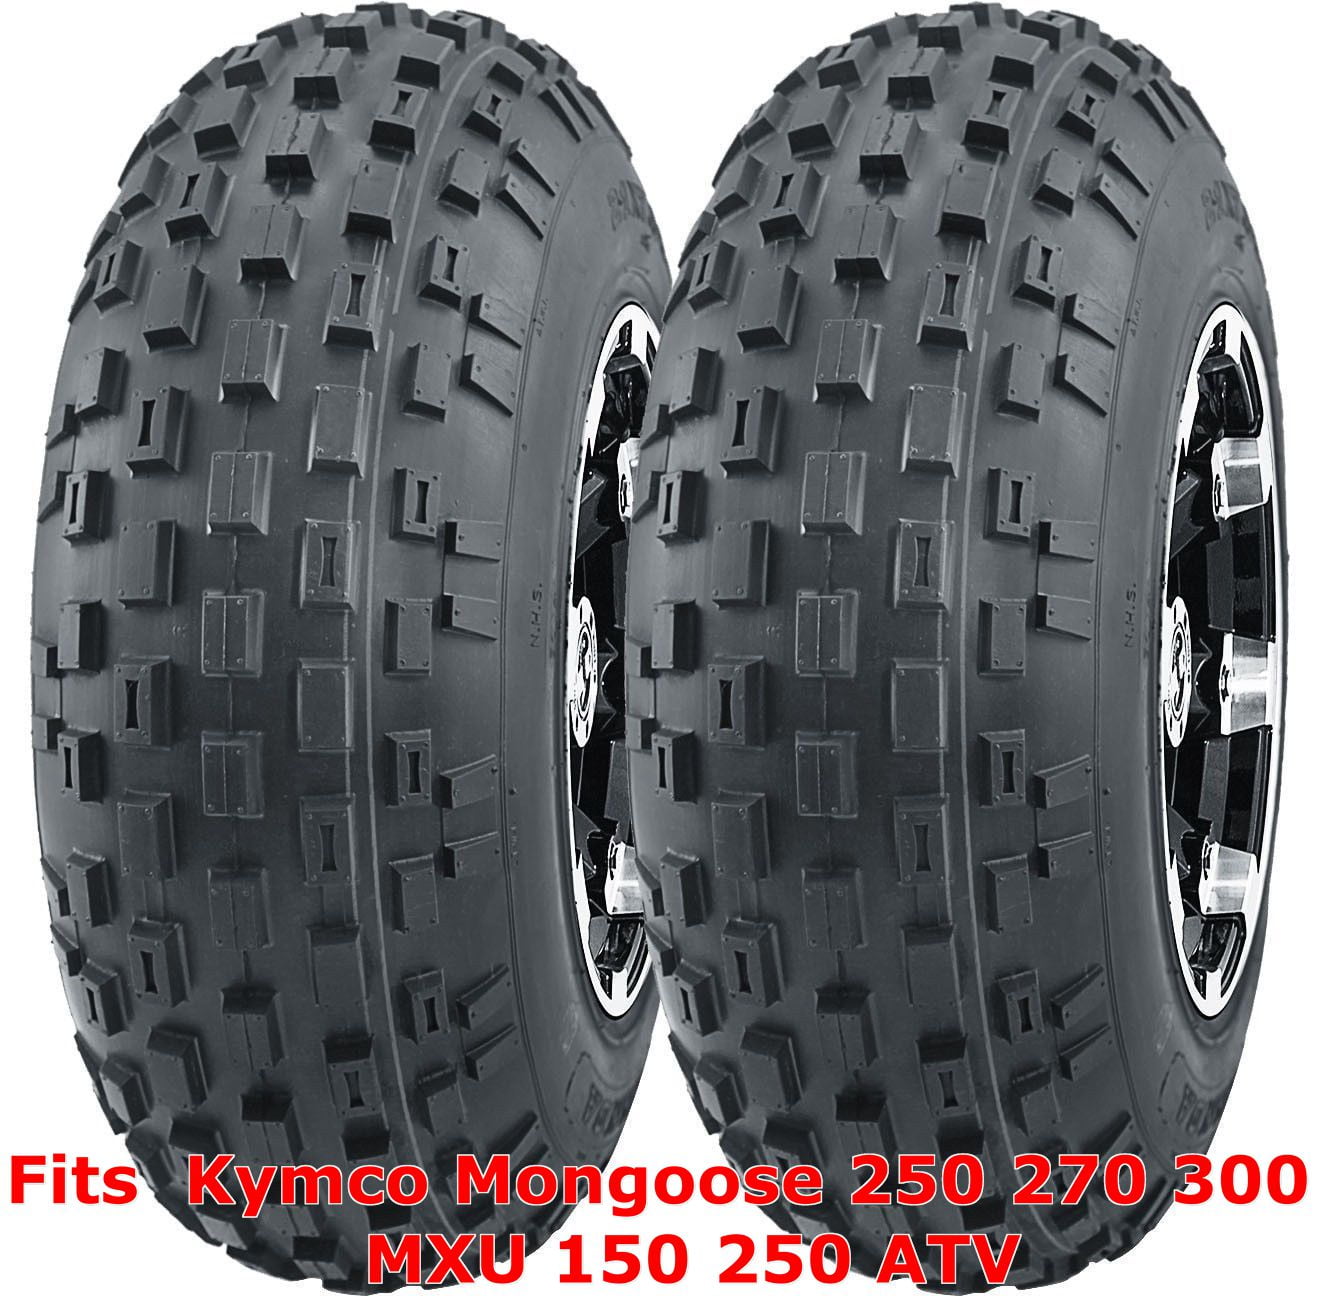 Kymco MXU 150 250 270 300 ATV Rear Tires Set 22x10-10 22x10x10 